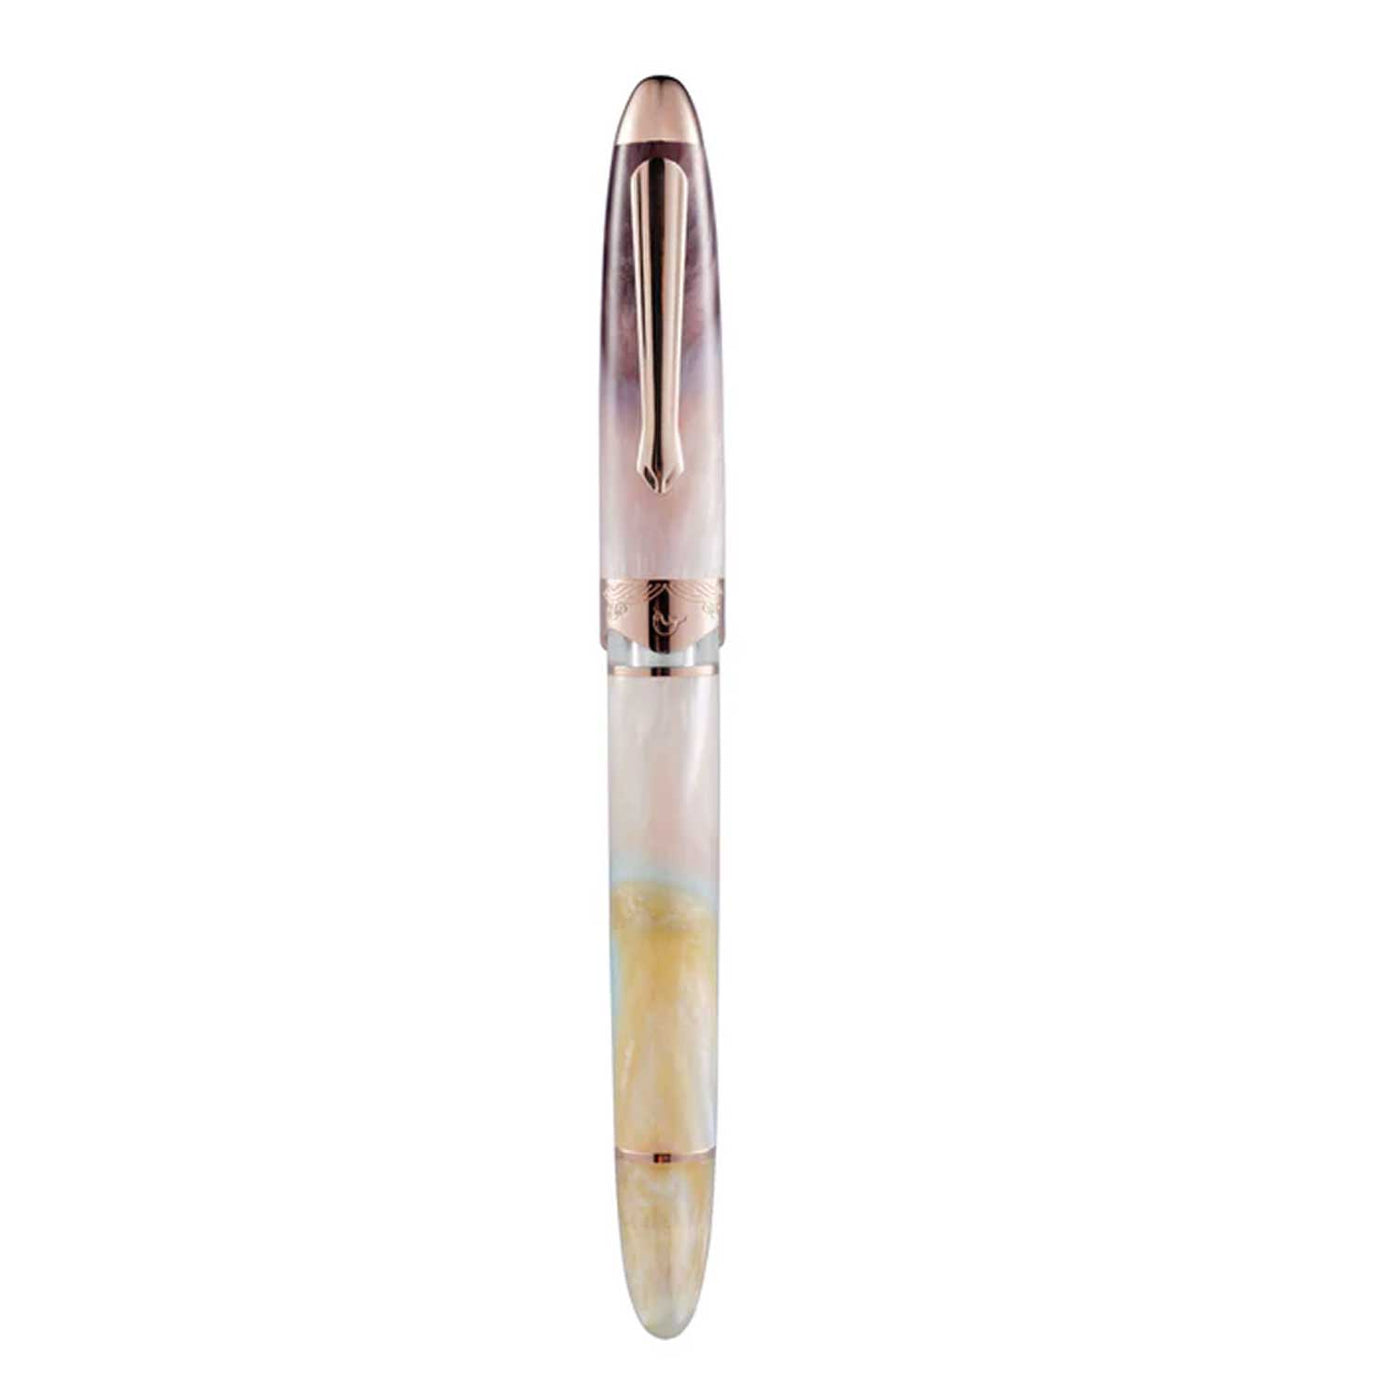 Nahvalur Horizon Fountain Pen - Wonderland RGT (Limited Edition) 2